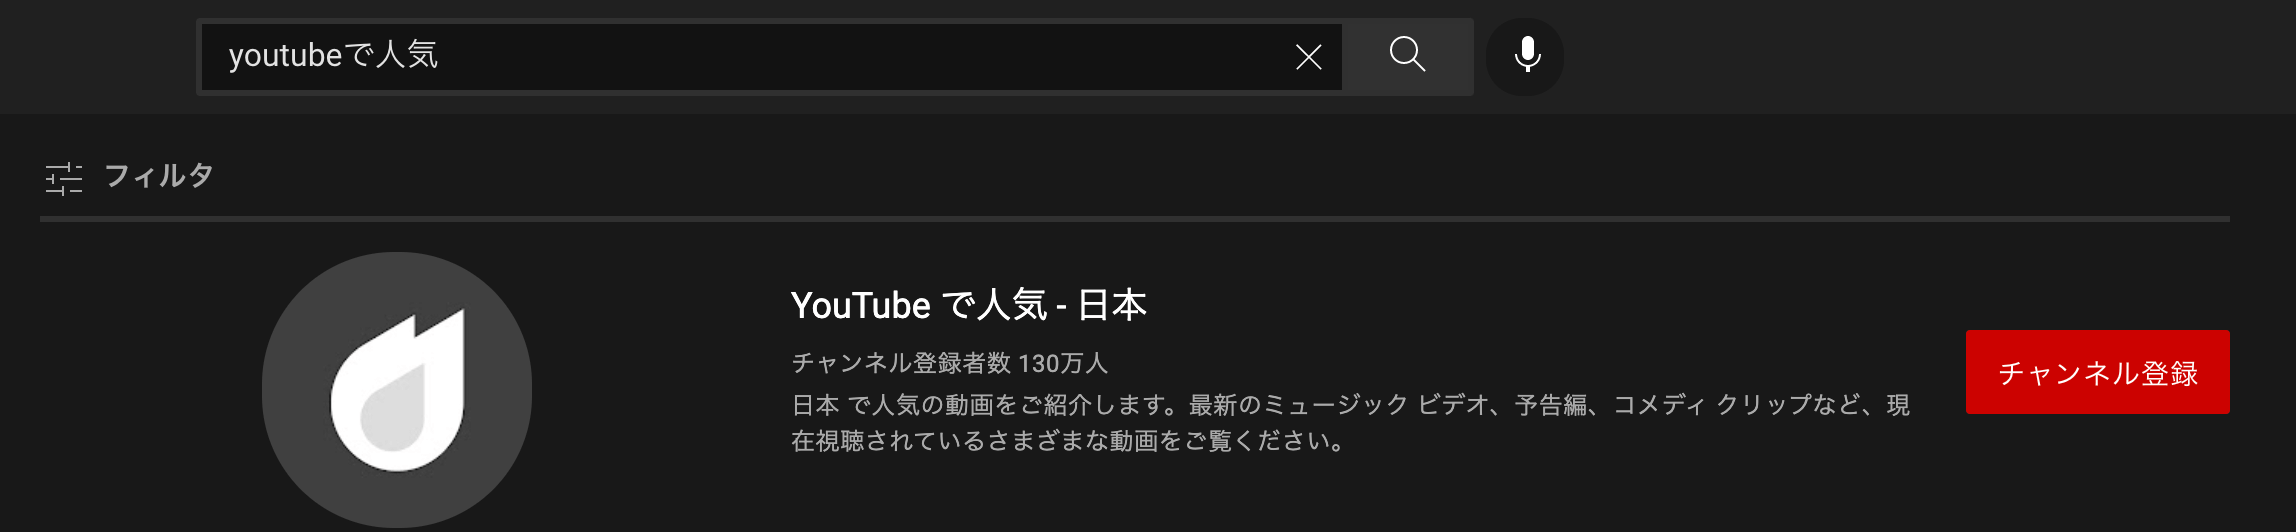 youtube-popular video-in Japan